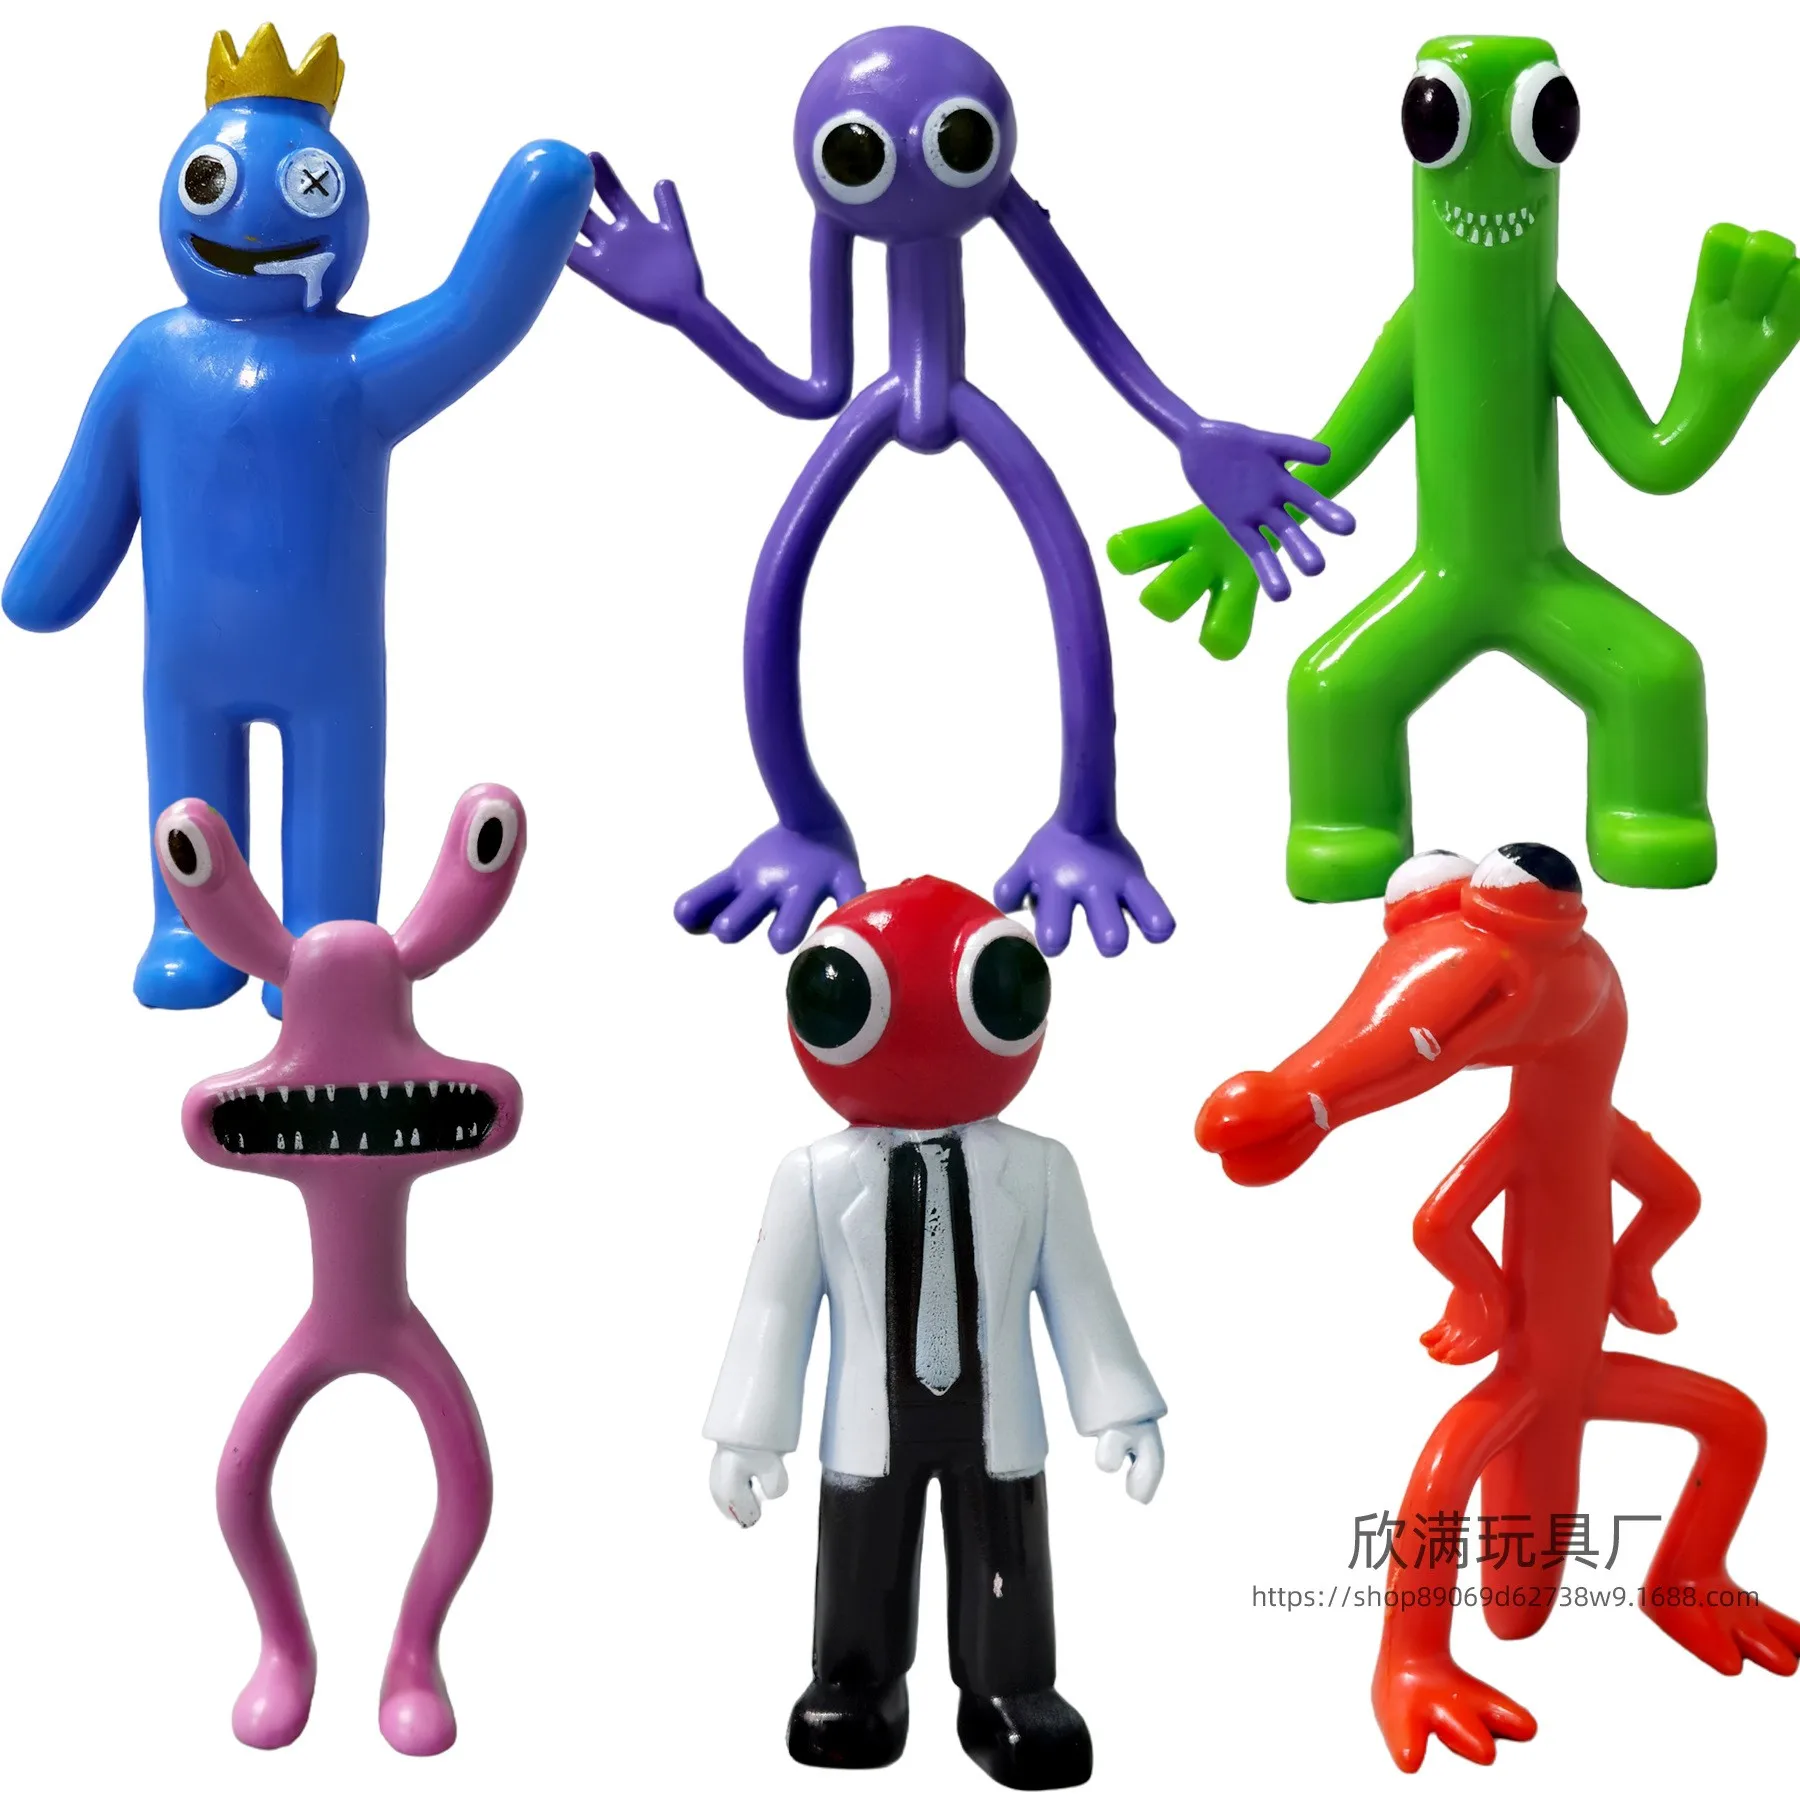 Rainbow Friends figuurset, Rainbow Friends bouwstenen figuren, Rainbow Friends  Roblox figuur, ornament, Action Model (6 stuks klein) : : Toys &  Games